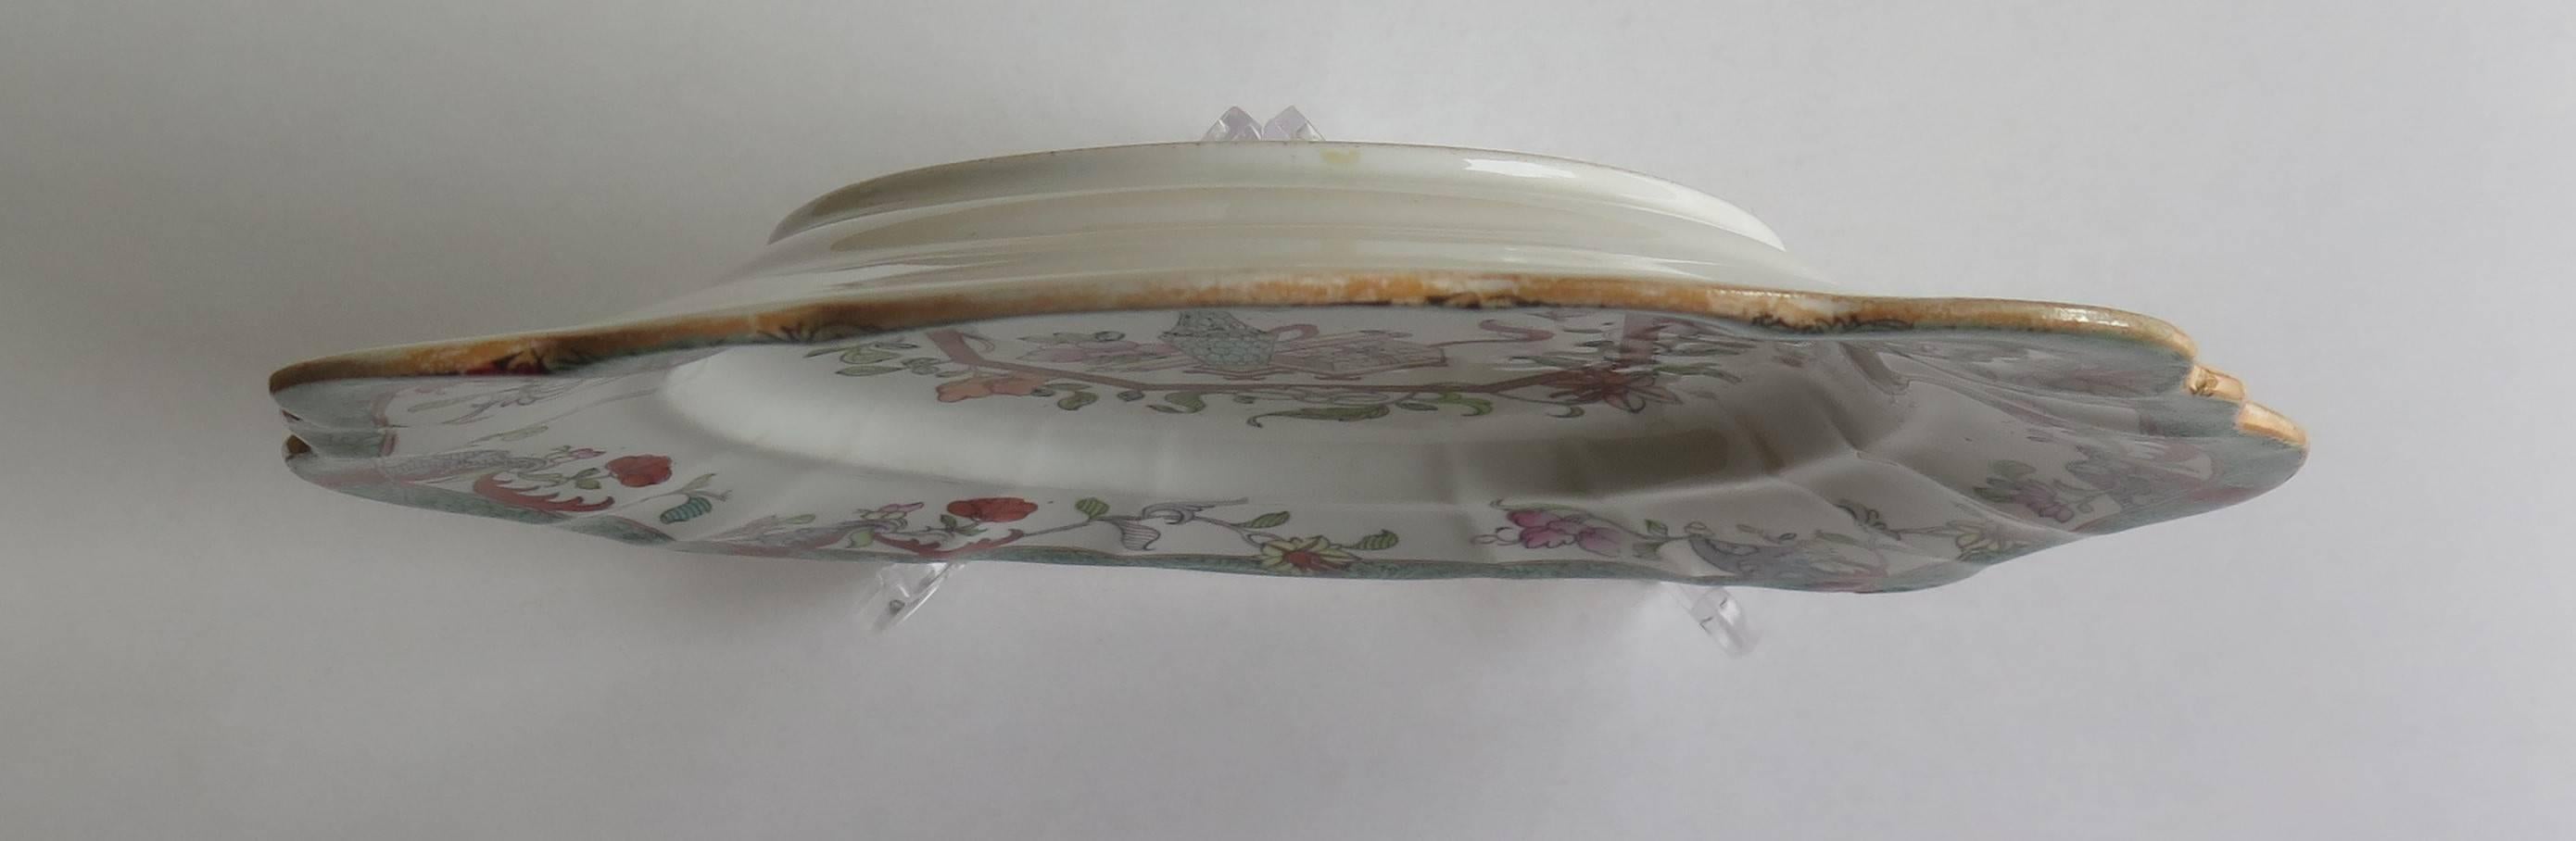 Mason's Ironstone Sandwich Plate or Dish box & vase Chinoiserie Ptn, Circa 1840 1